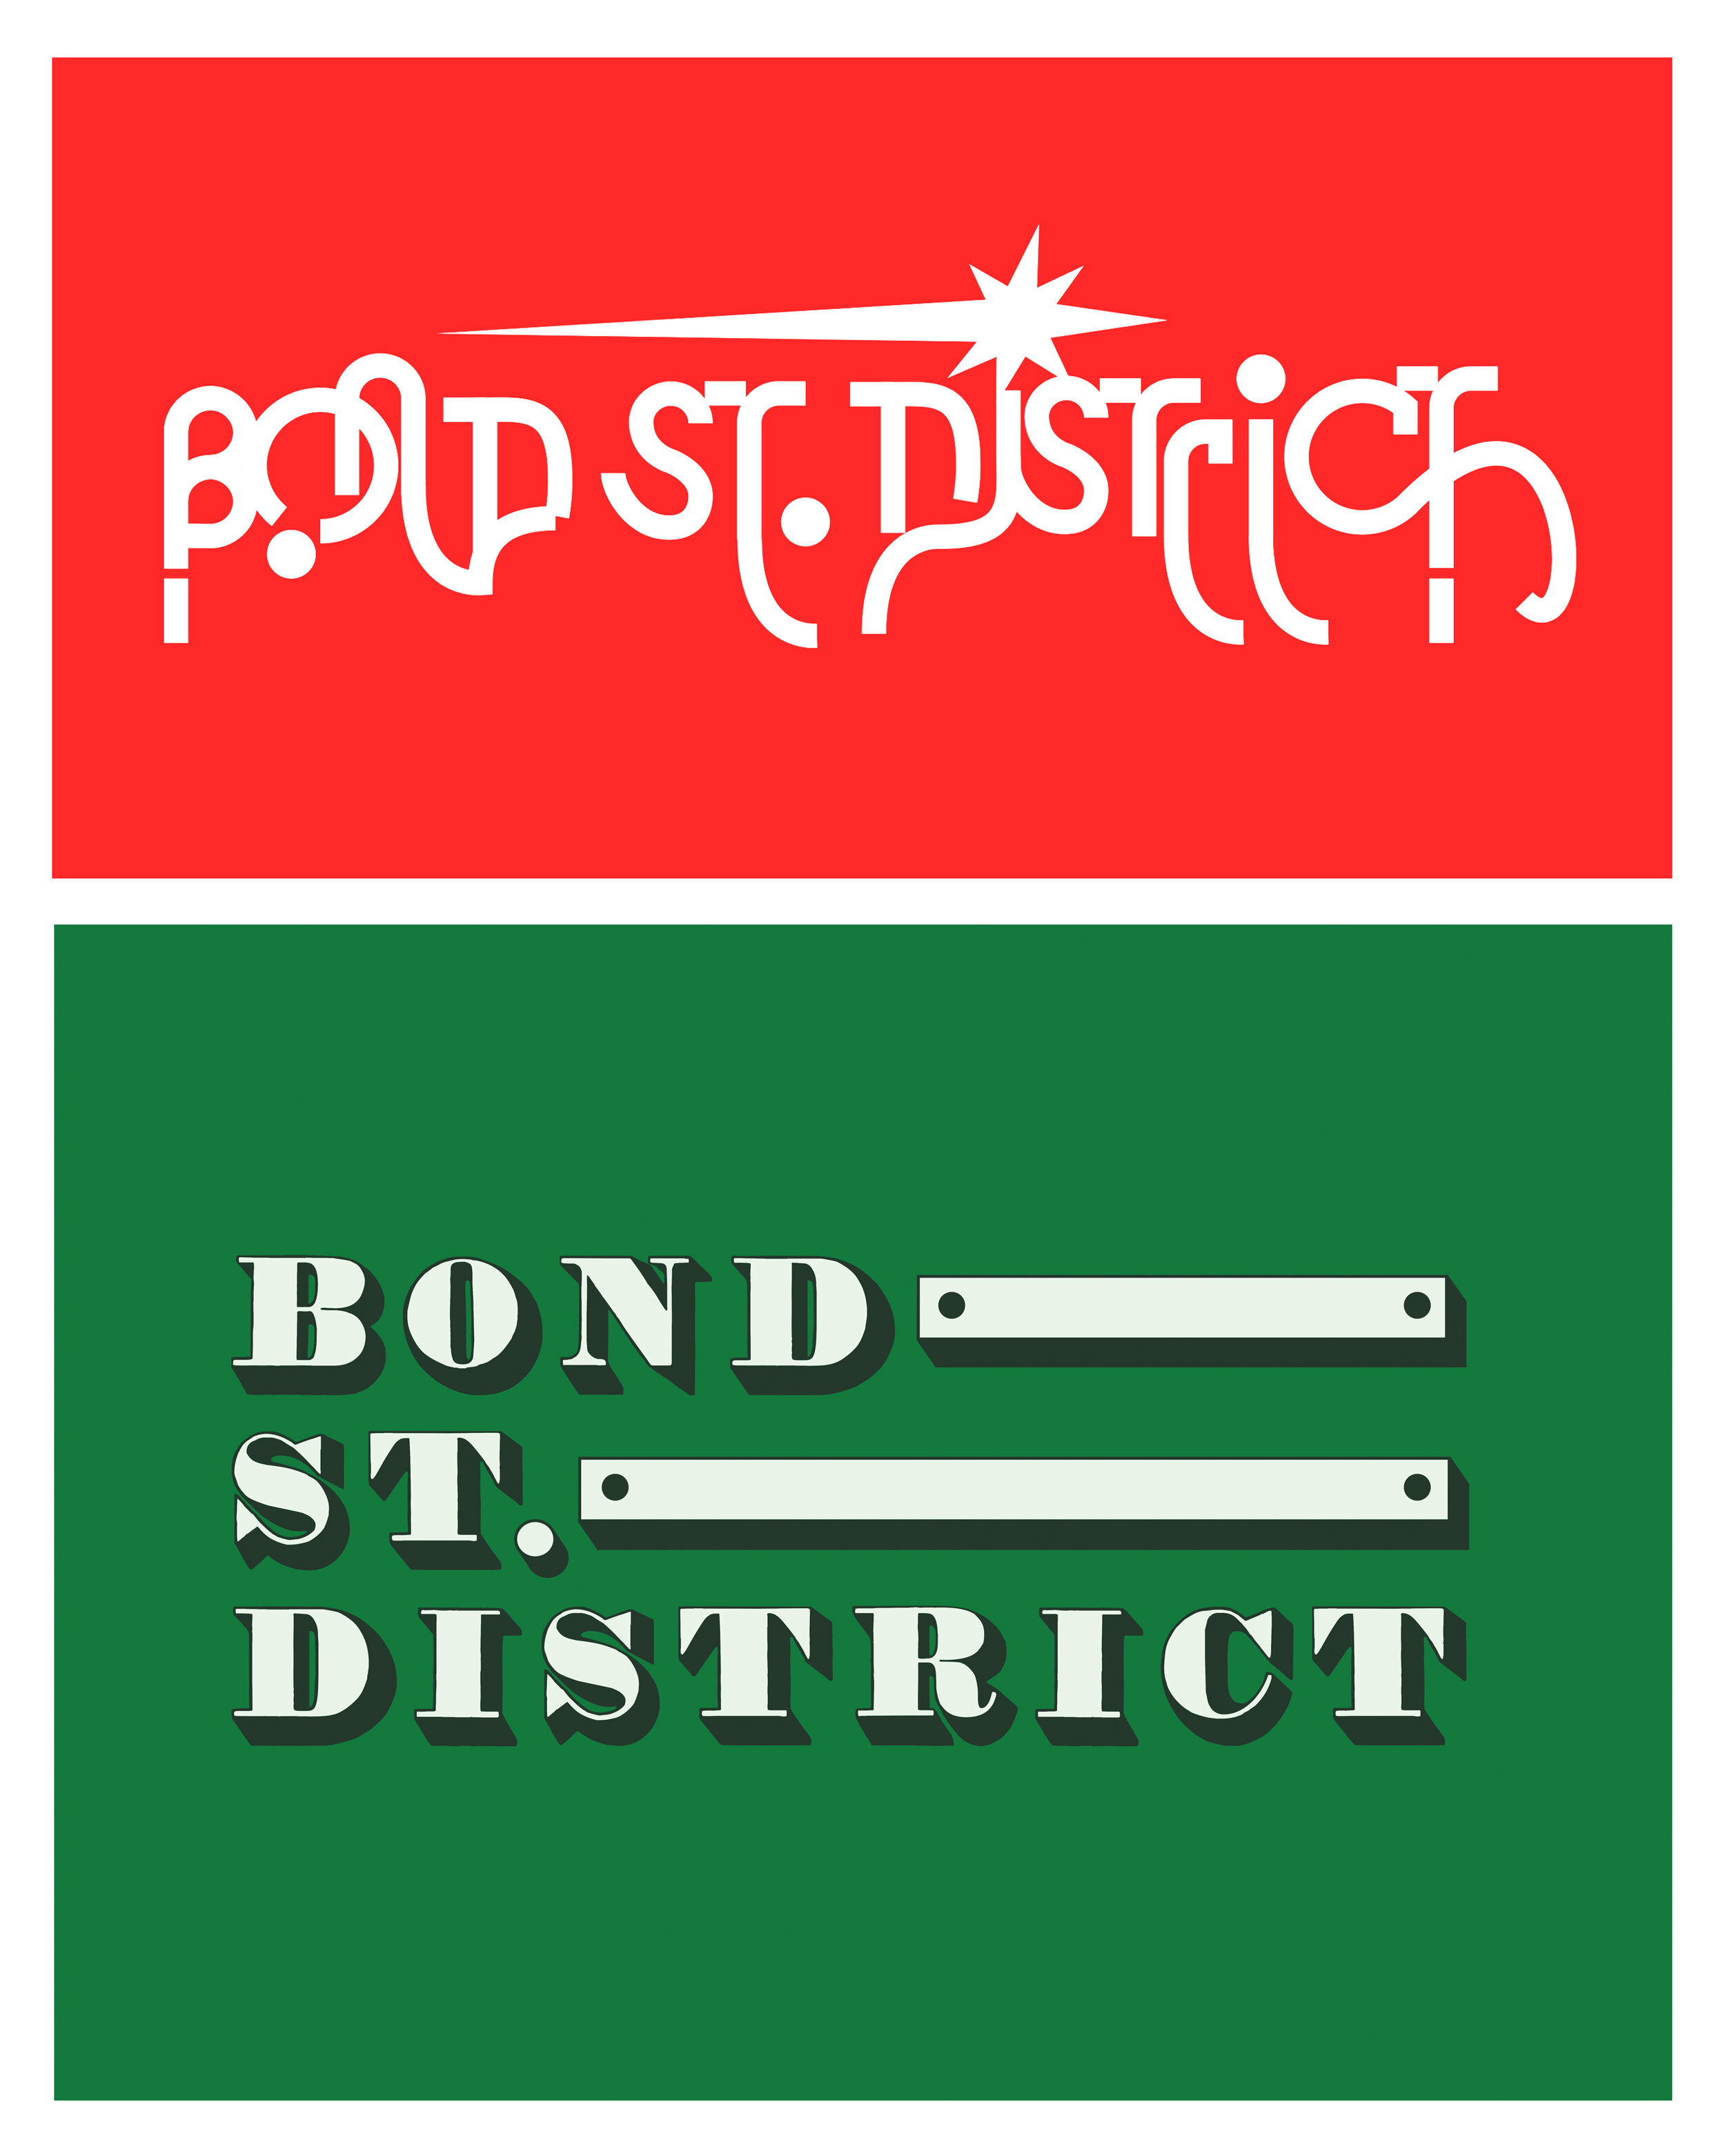 Unused Logo Designs for Bond St. District